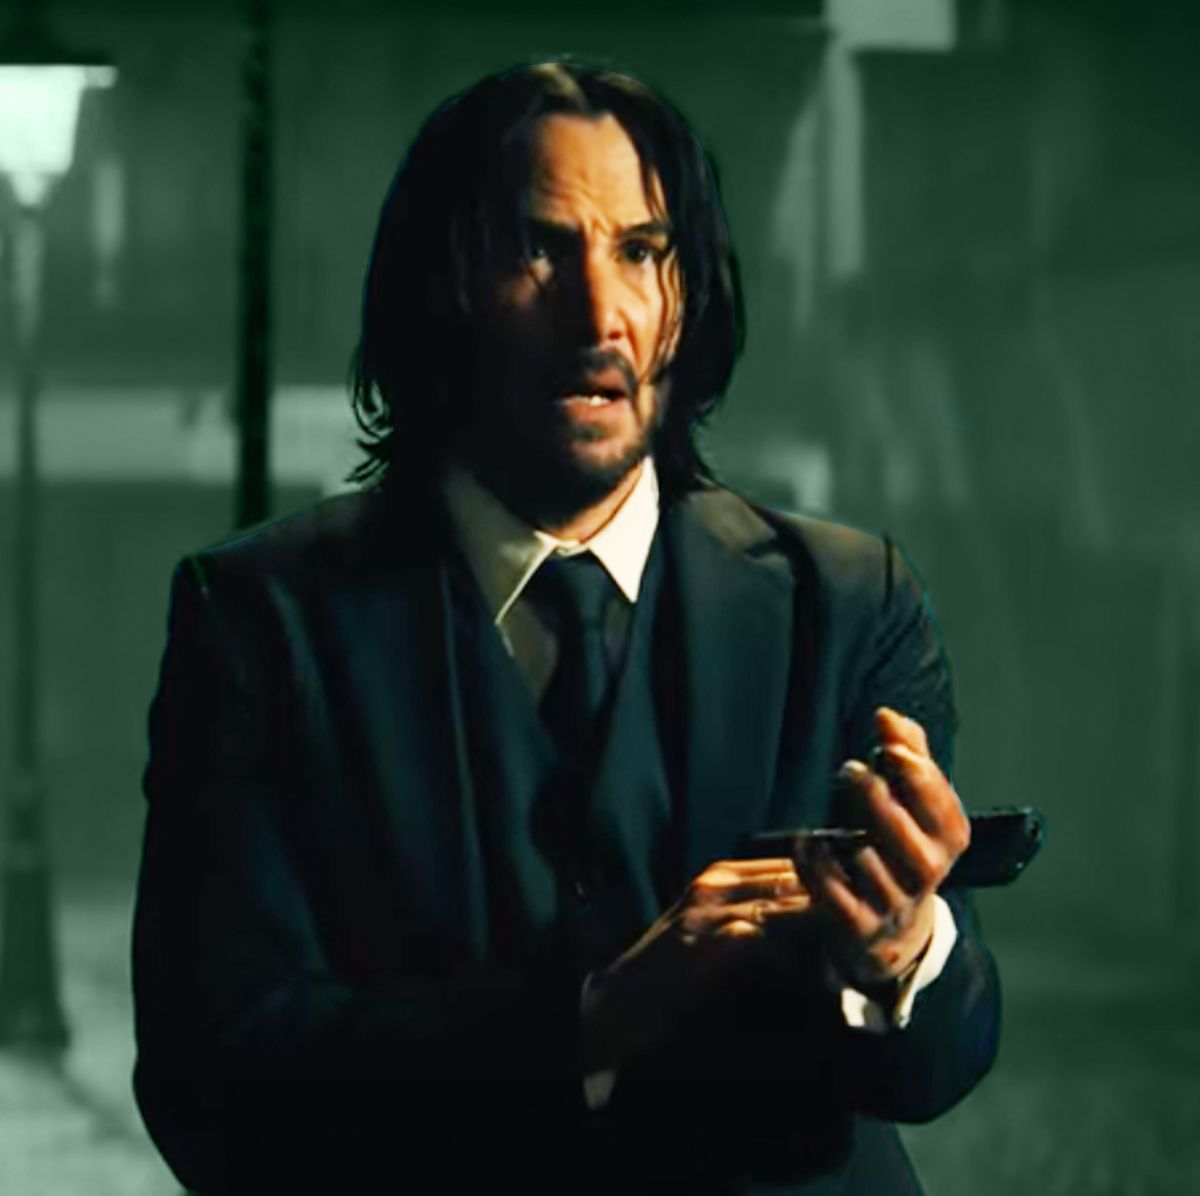 John Wick 4' trailer introduces new villain